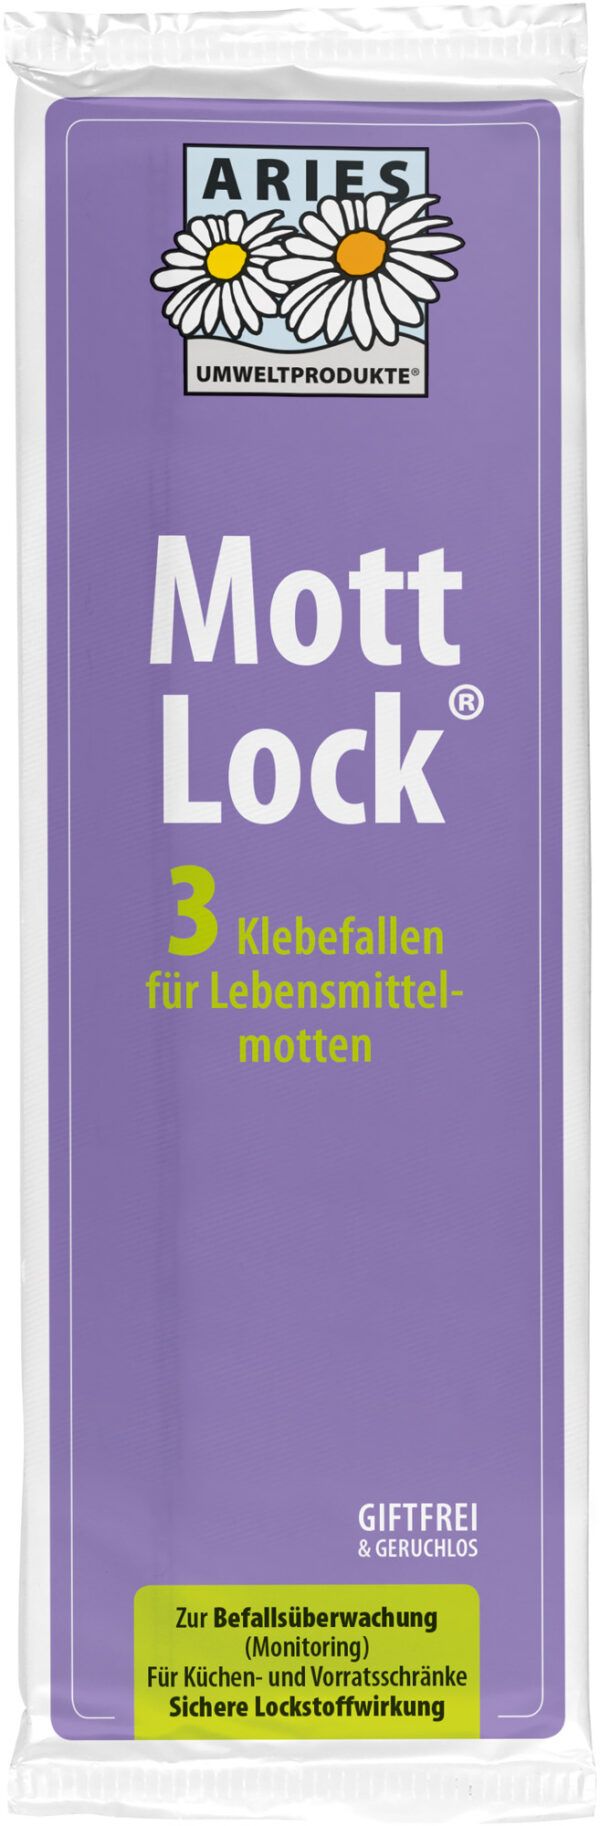 Aries Mottlock 3 Klebefallen für Lebensmittelmotten 24 x 3Stück ***